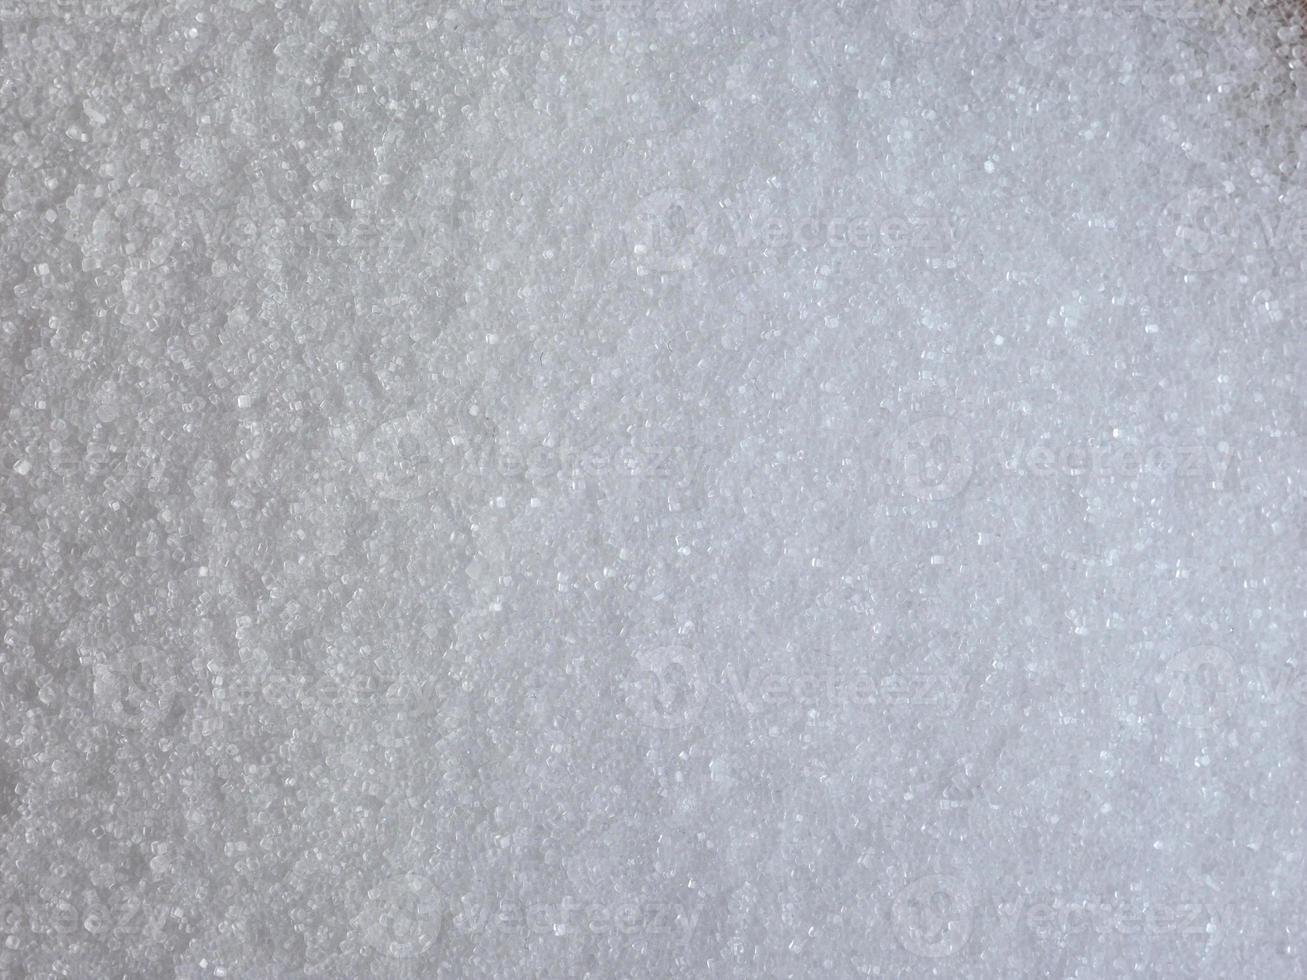 Table salt background photo